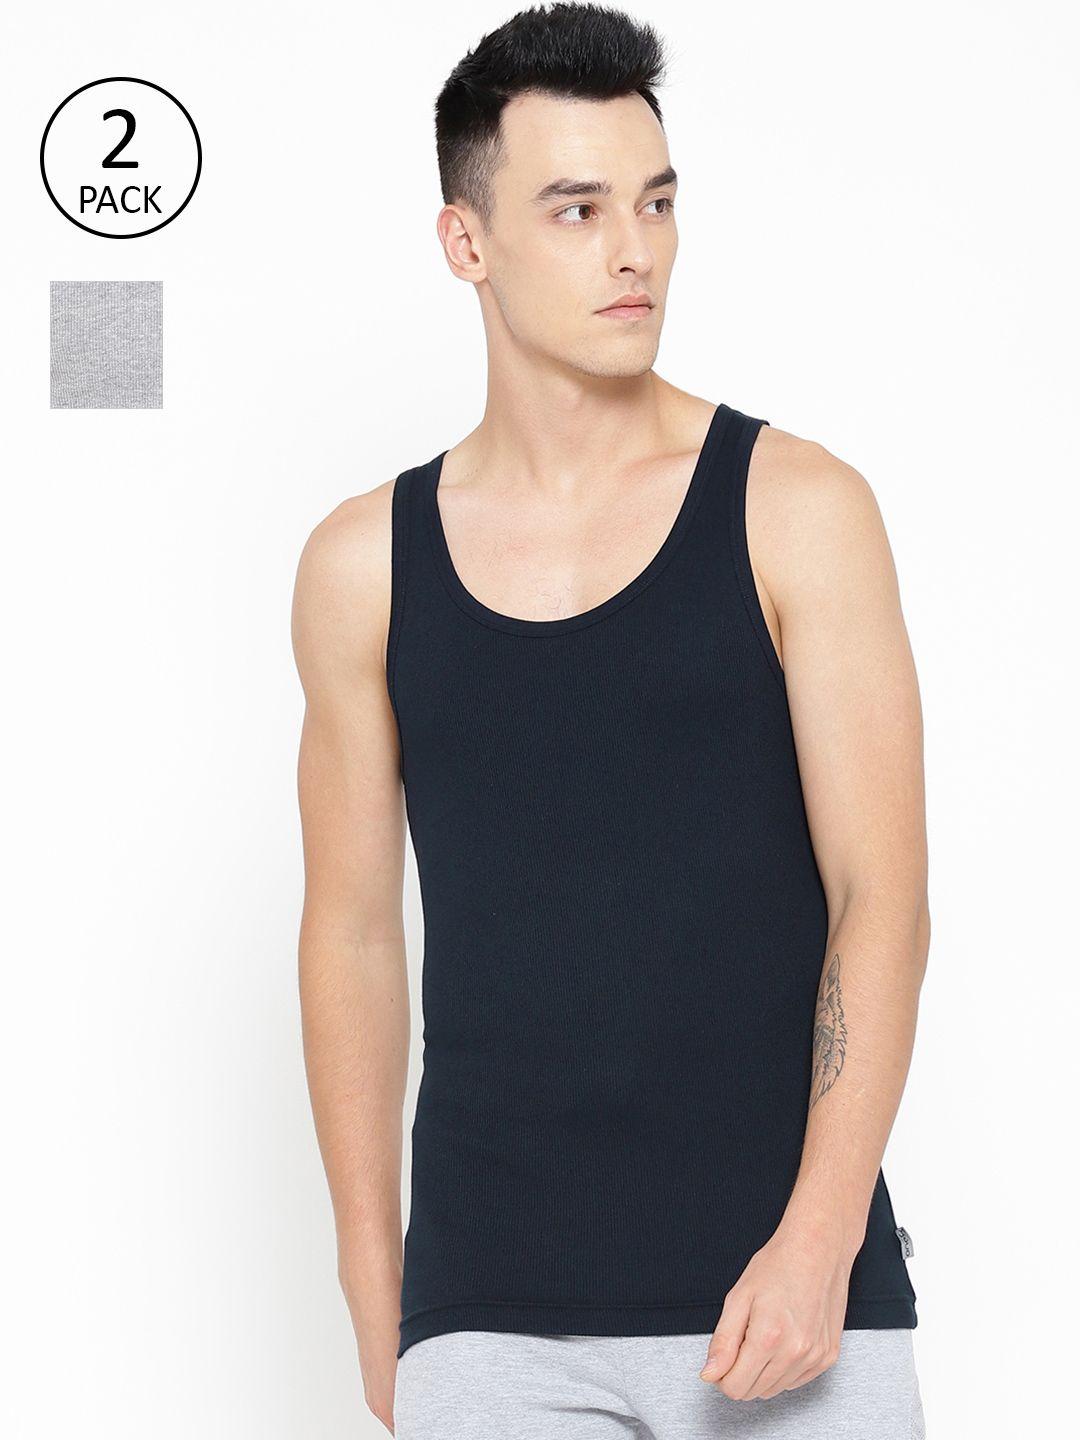 one8-by-virat-kohli-men-pack-of-2-solid-innerwear-vests-10486276-1